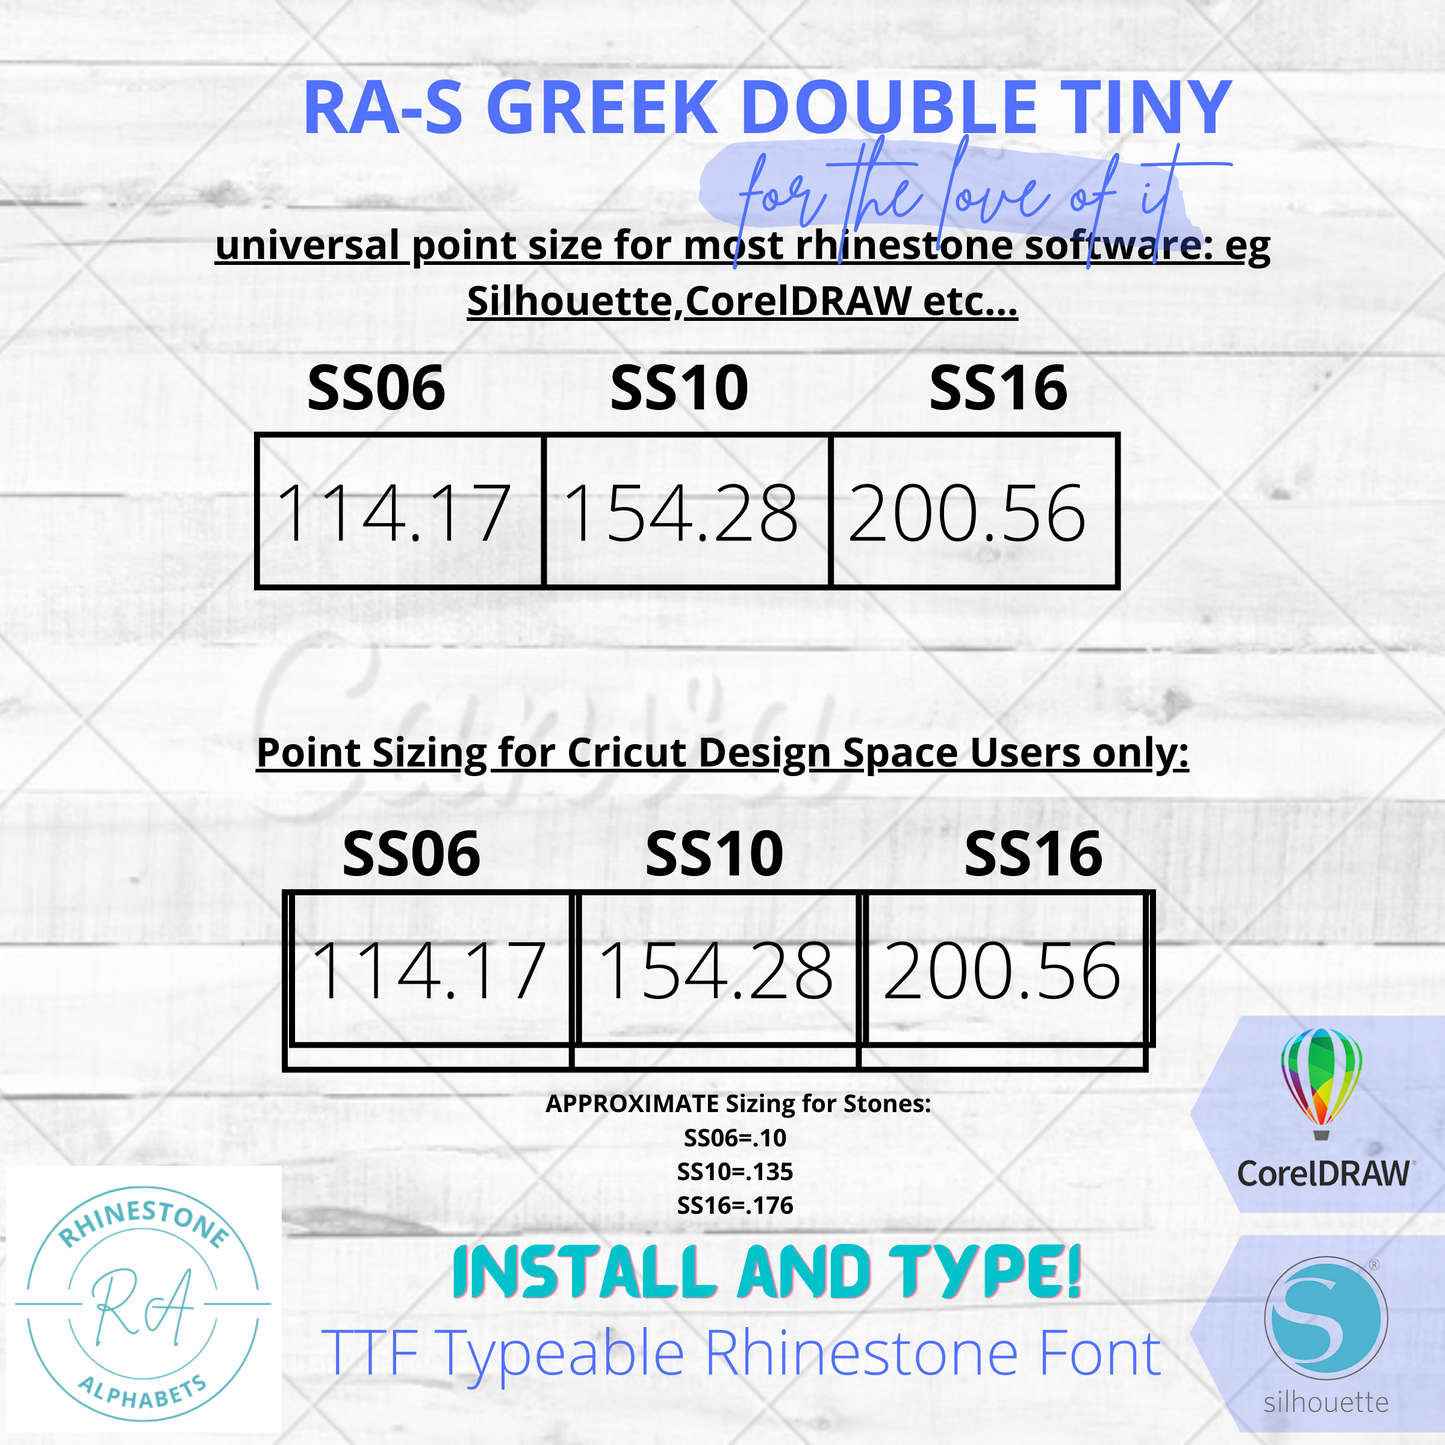 RA-S Greek Double Tiny a TTF doubleline Rhinestone Greek font